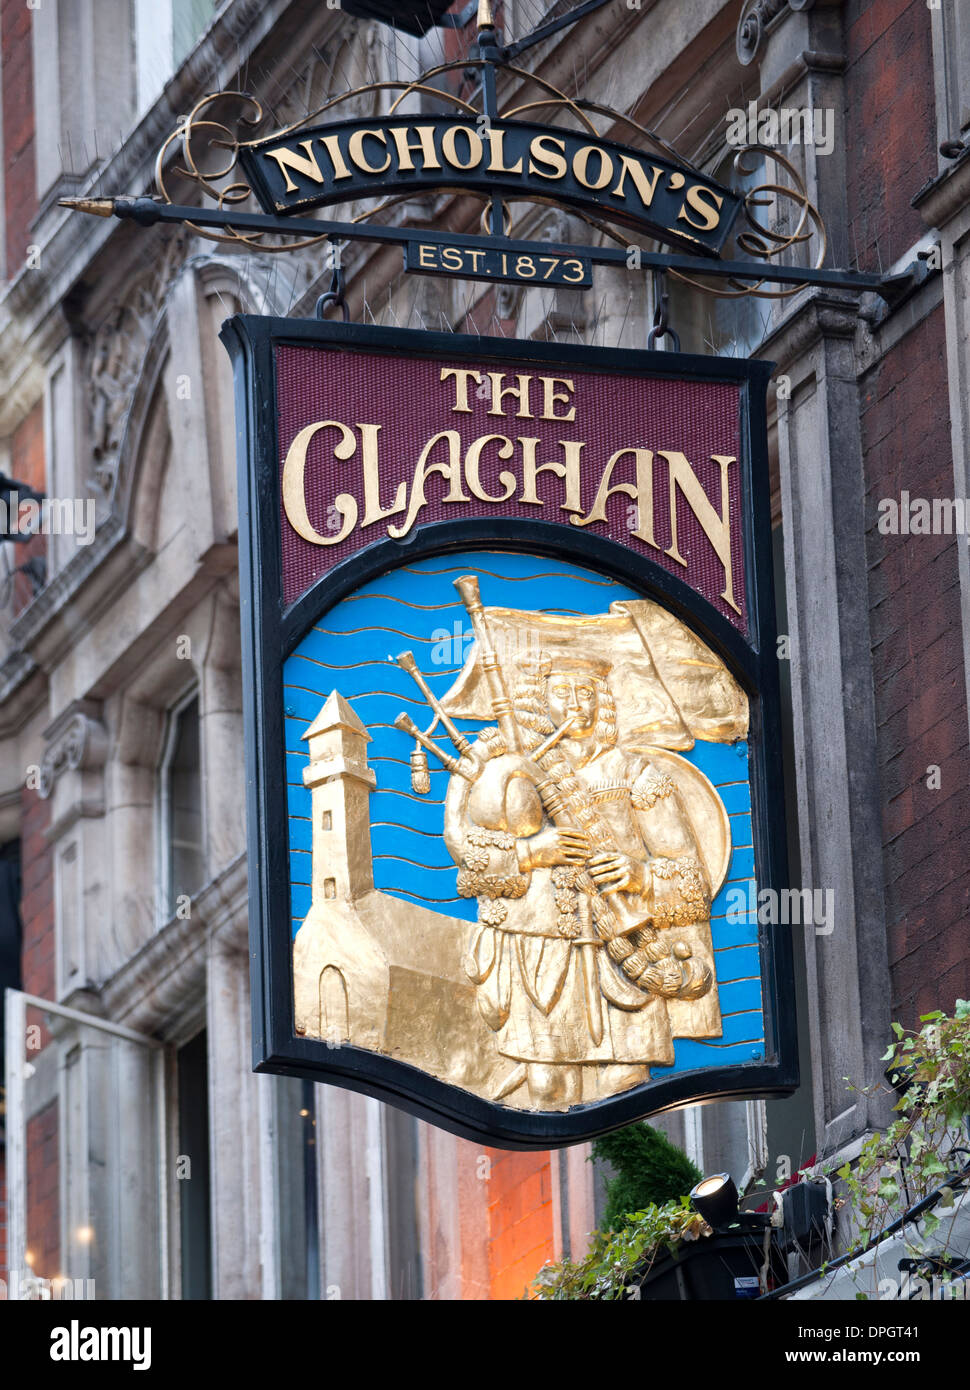 Pub sign for The Clachan public house, Kingly Street, Soho, London, UK. Stock Photo